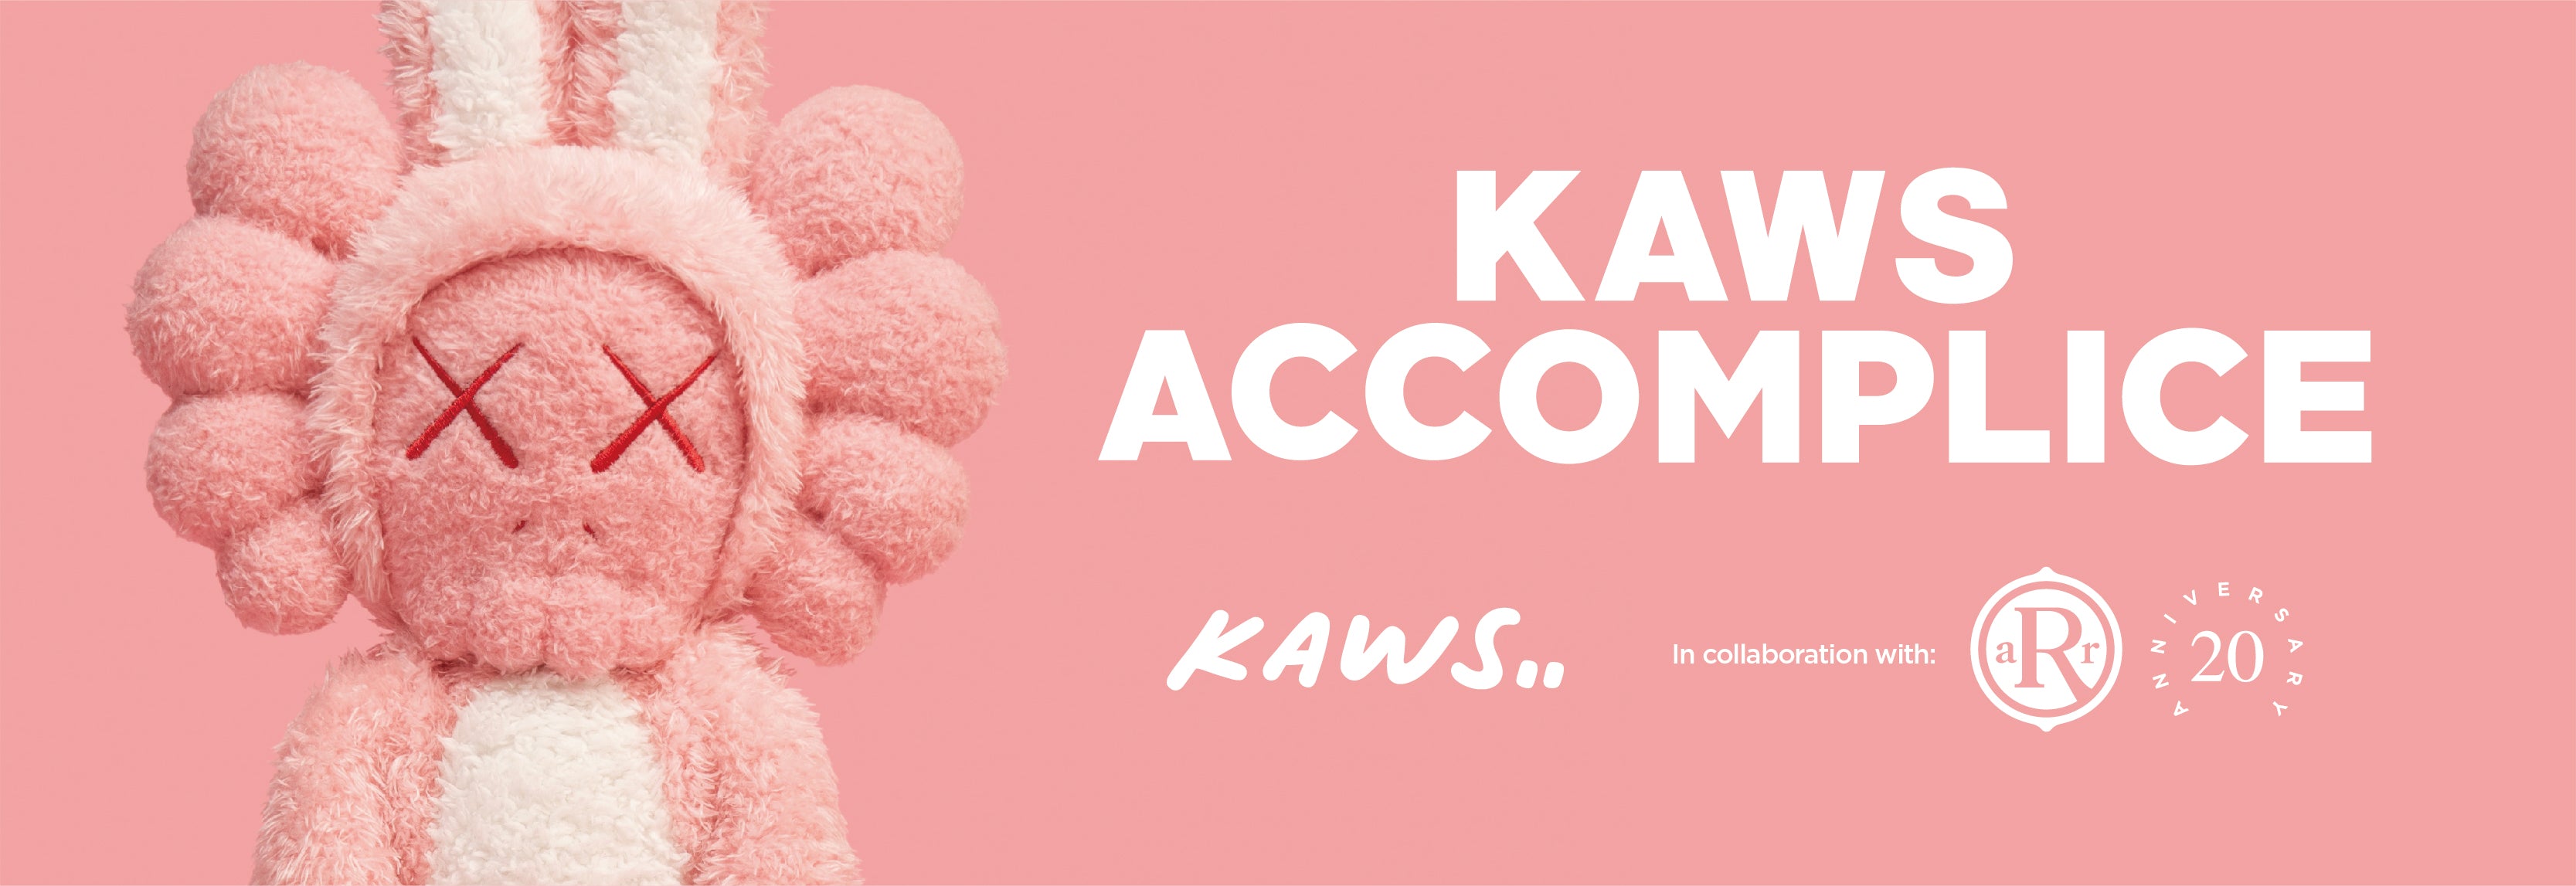 KAWS - Accomplice - Plush for Sale